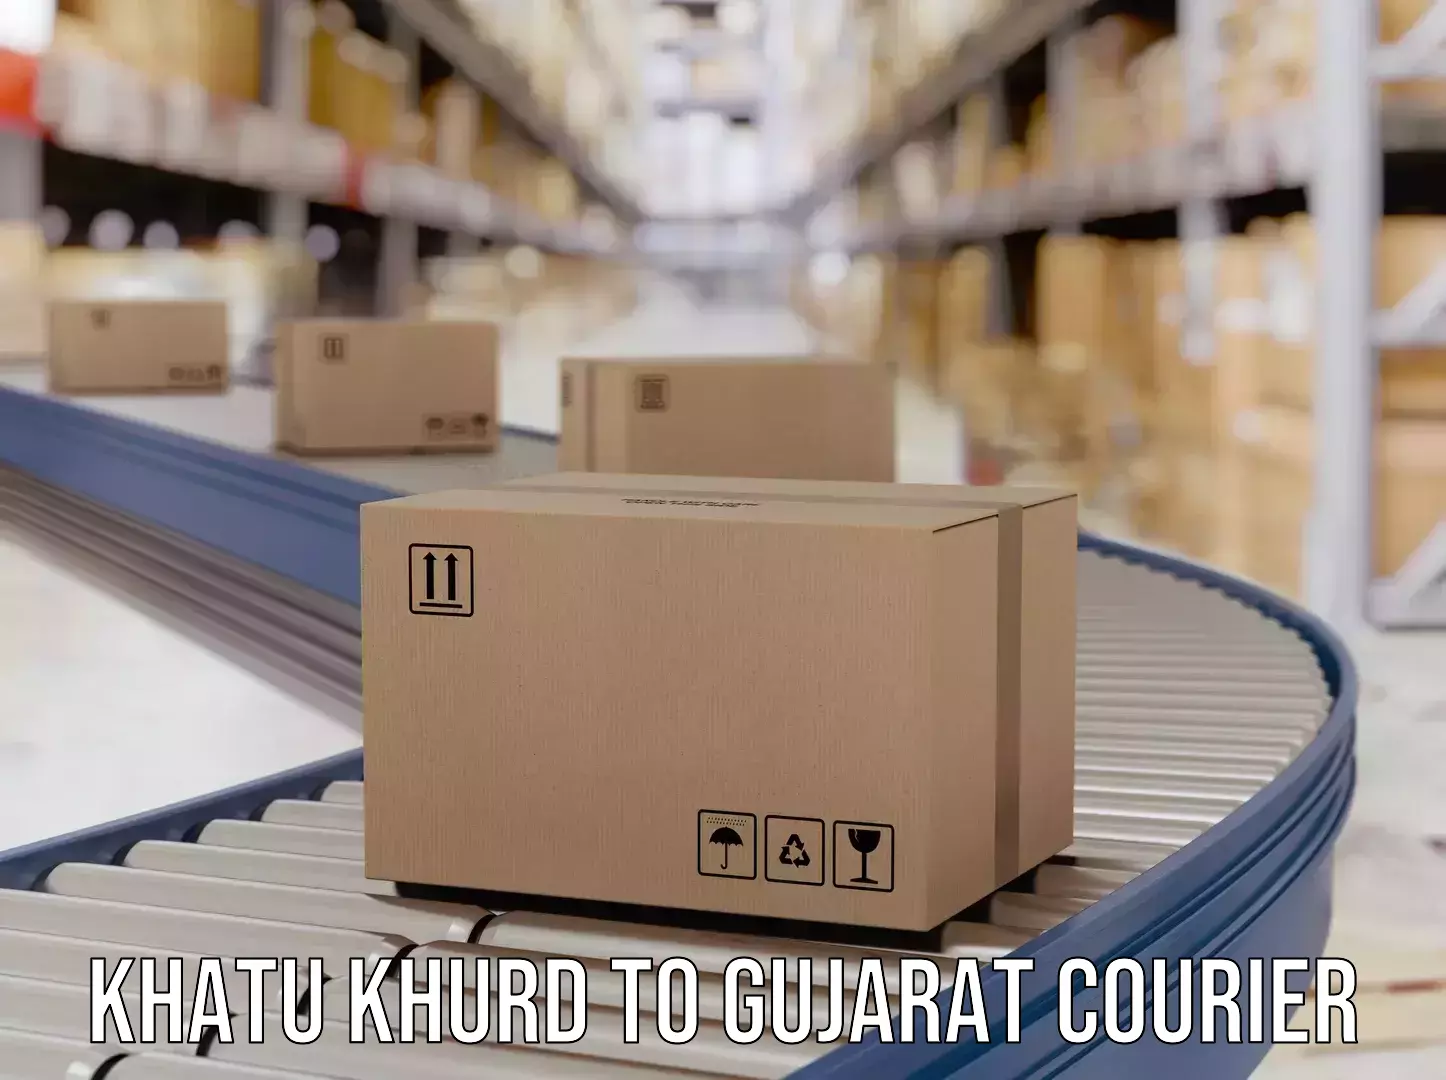 Supply chain delivery Khatu Khurd to Dholka